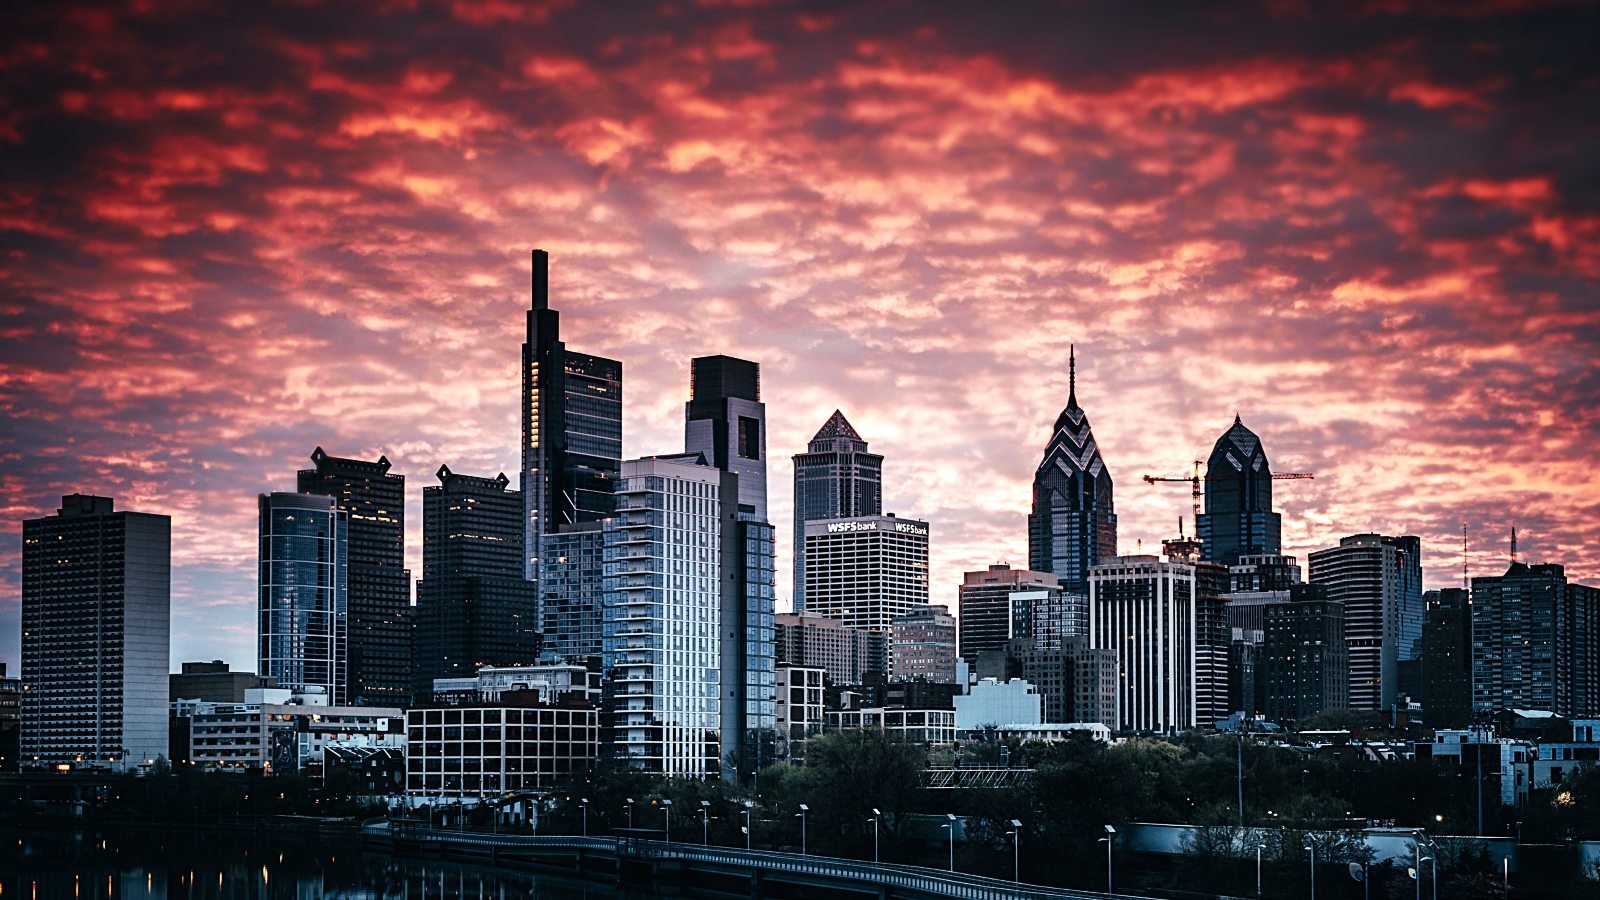 City of Philadelphia skyline